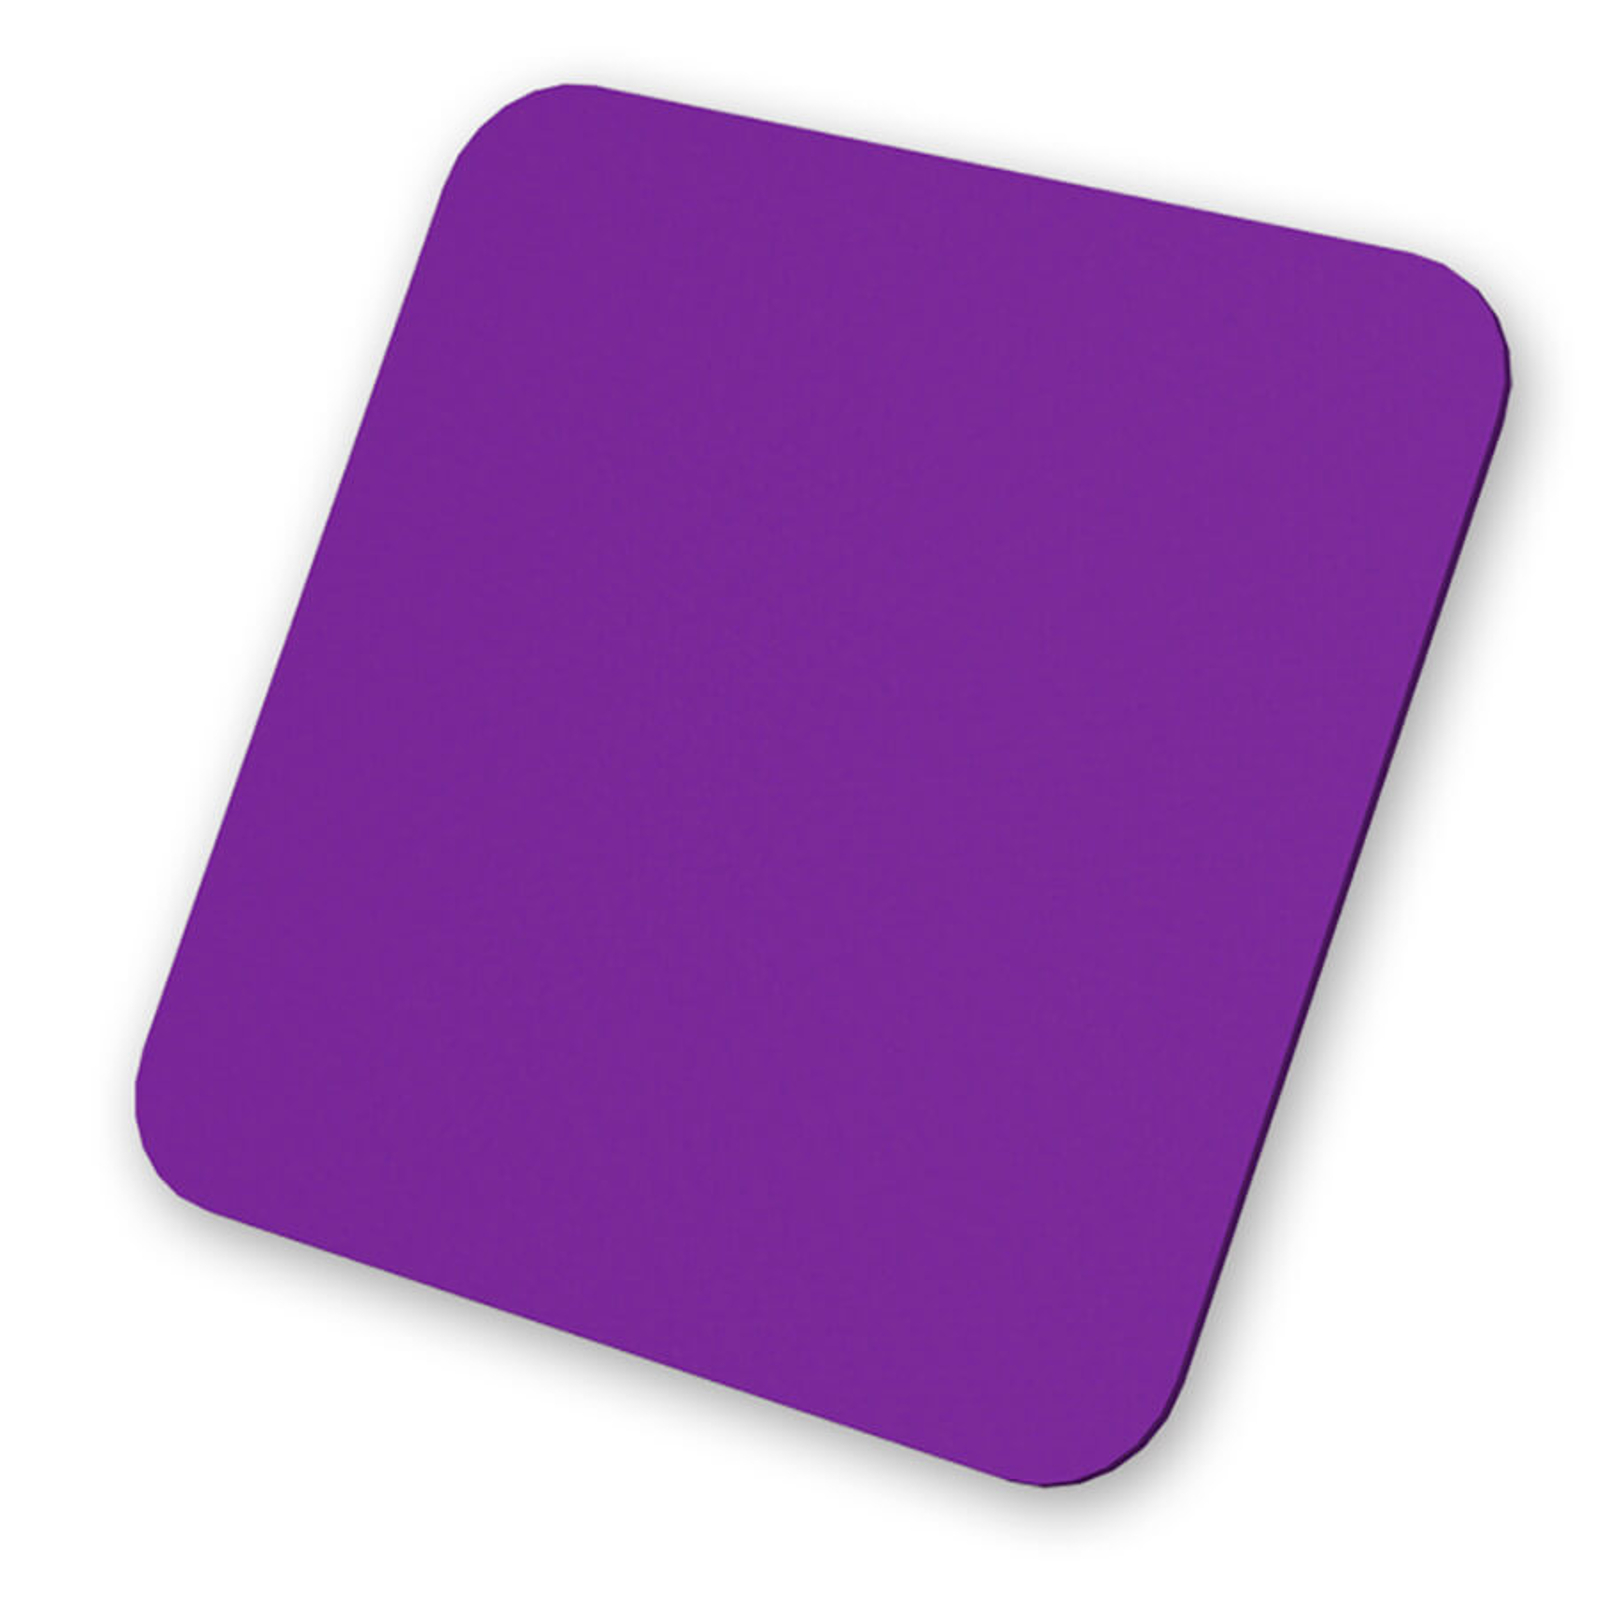 Istuintyyny Cube-koristevalaisimeen, violetti